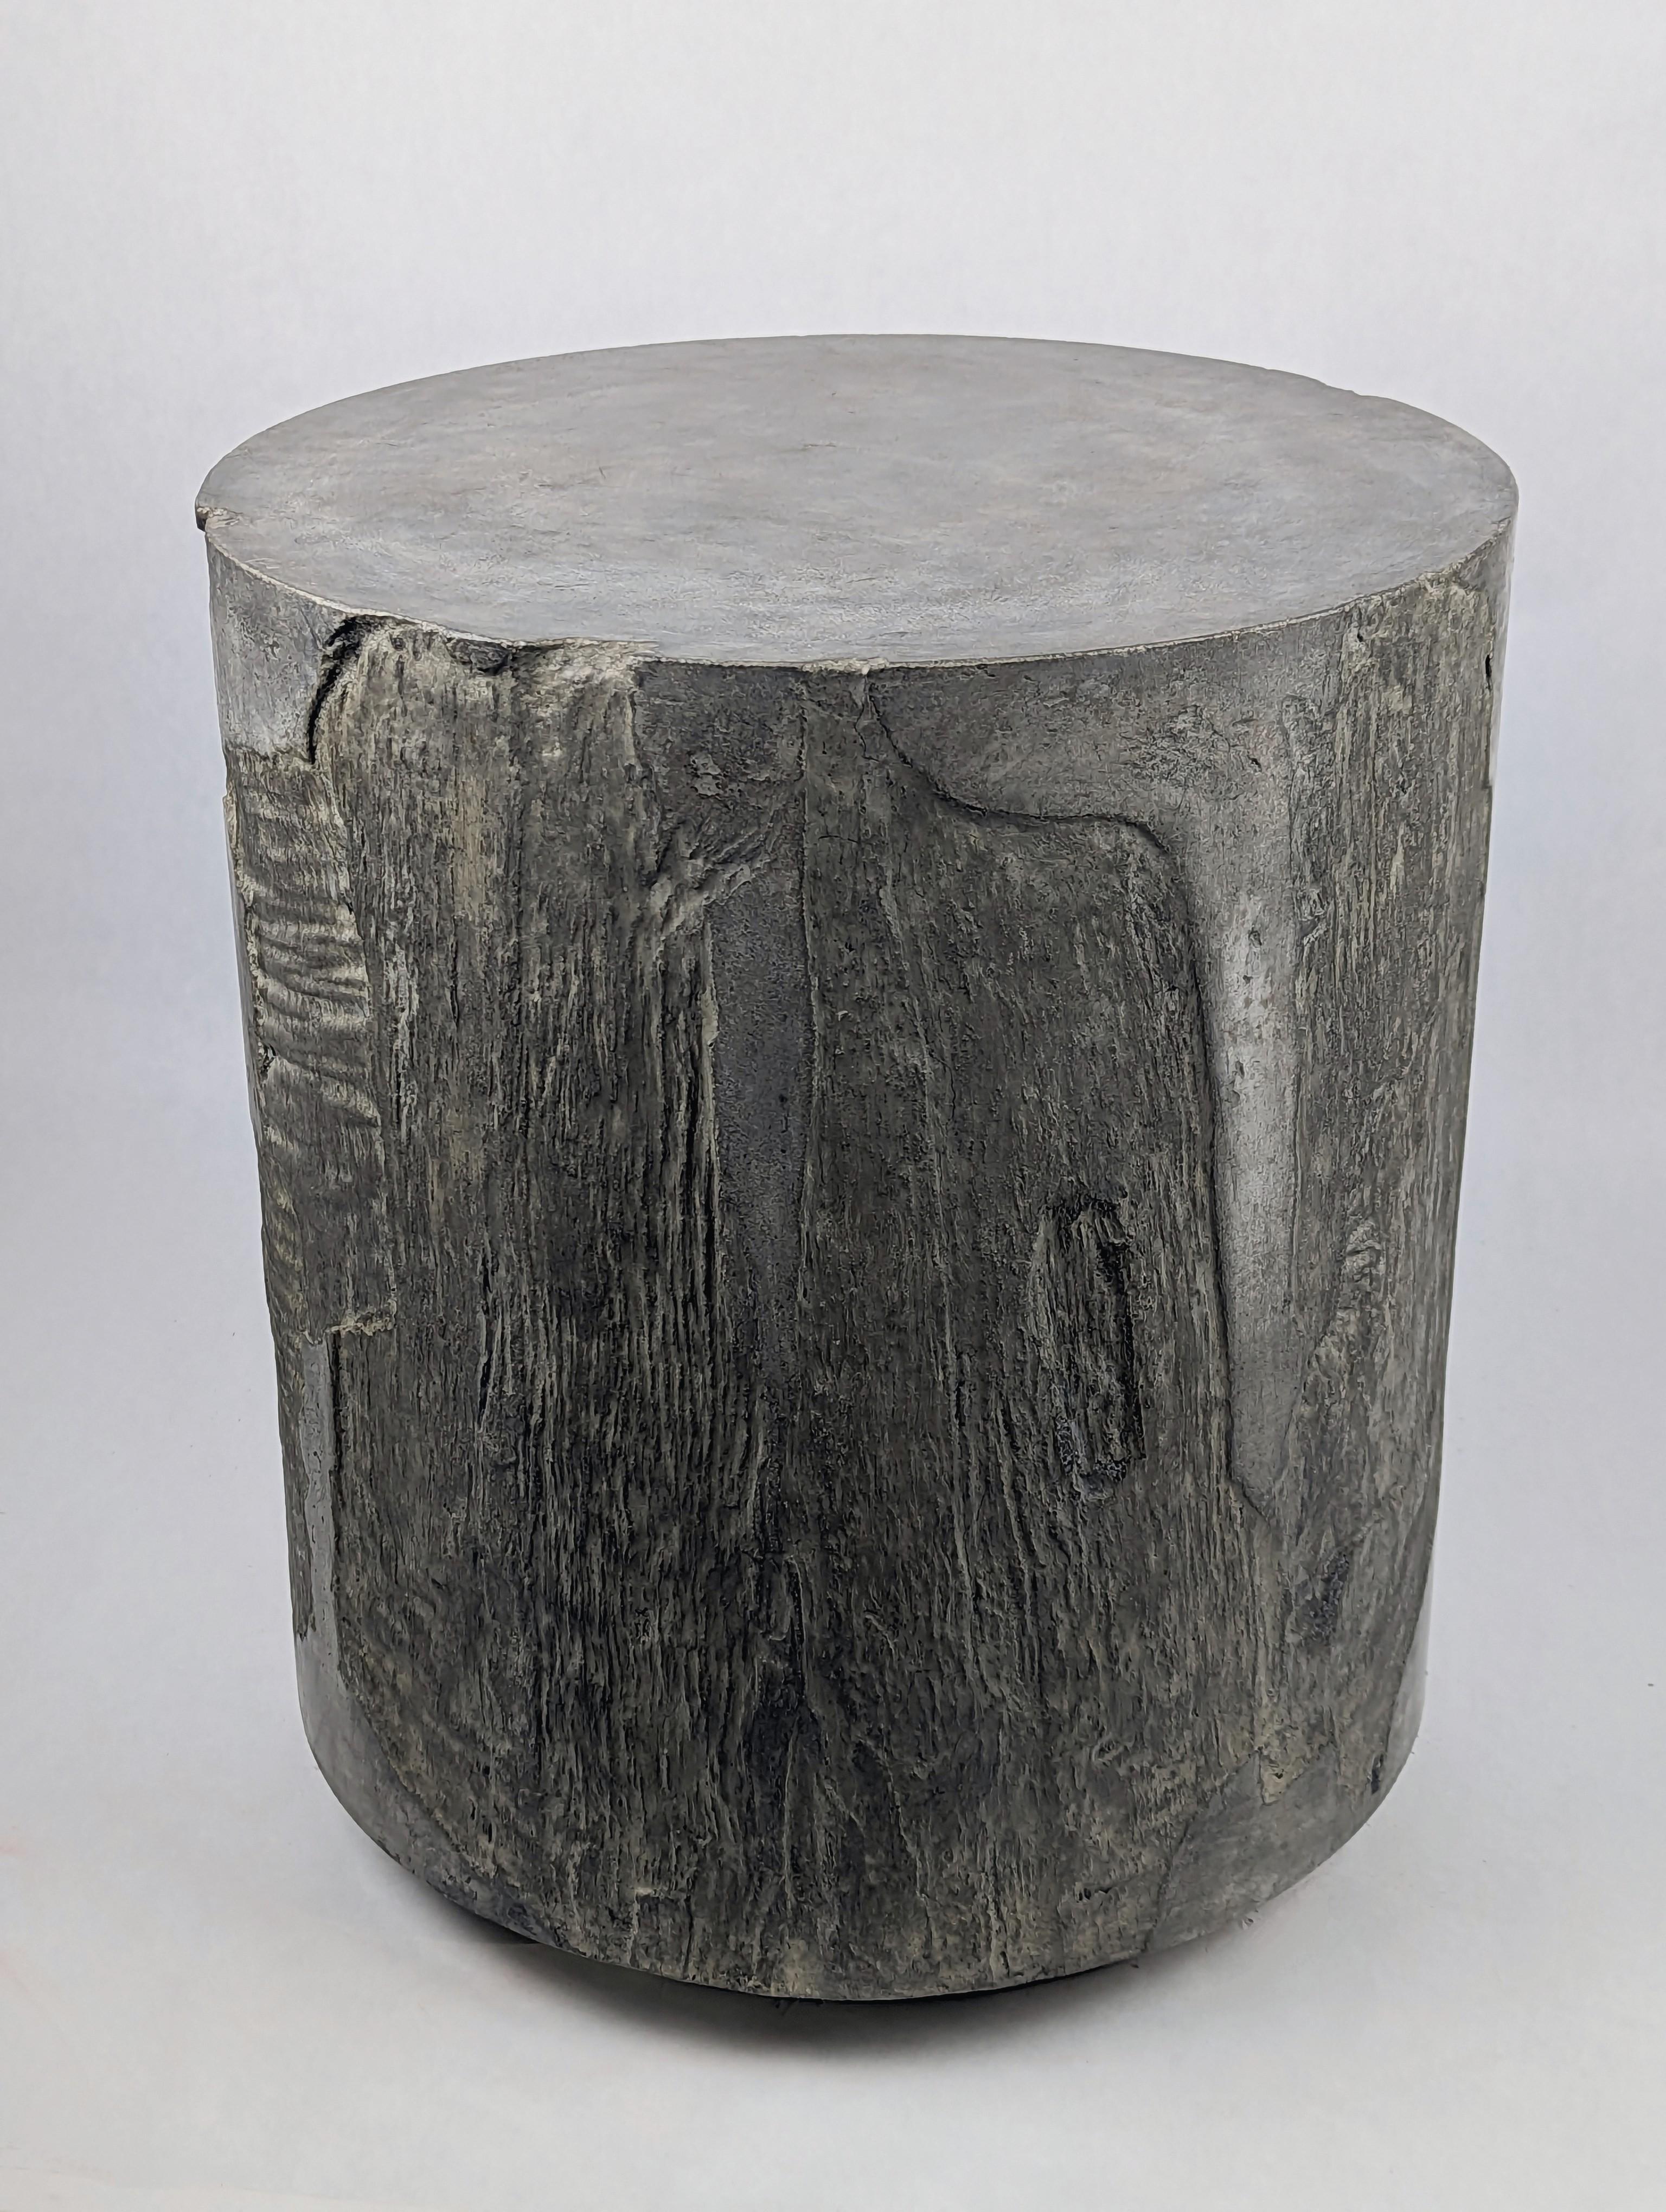 Brutalist Dark Grey Concrete Stool with Stone or Cliff-like Texture, 'Vertigo'